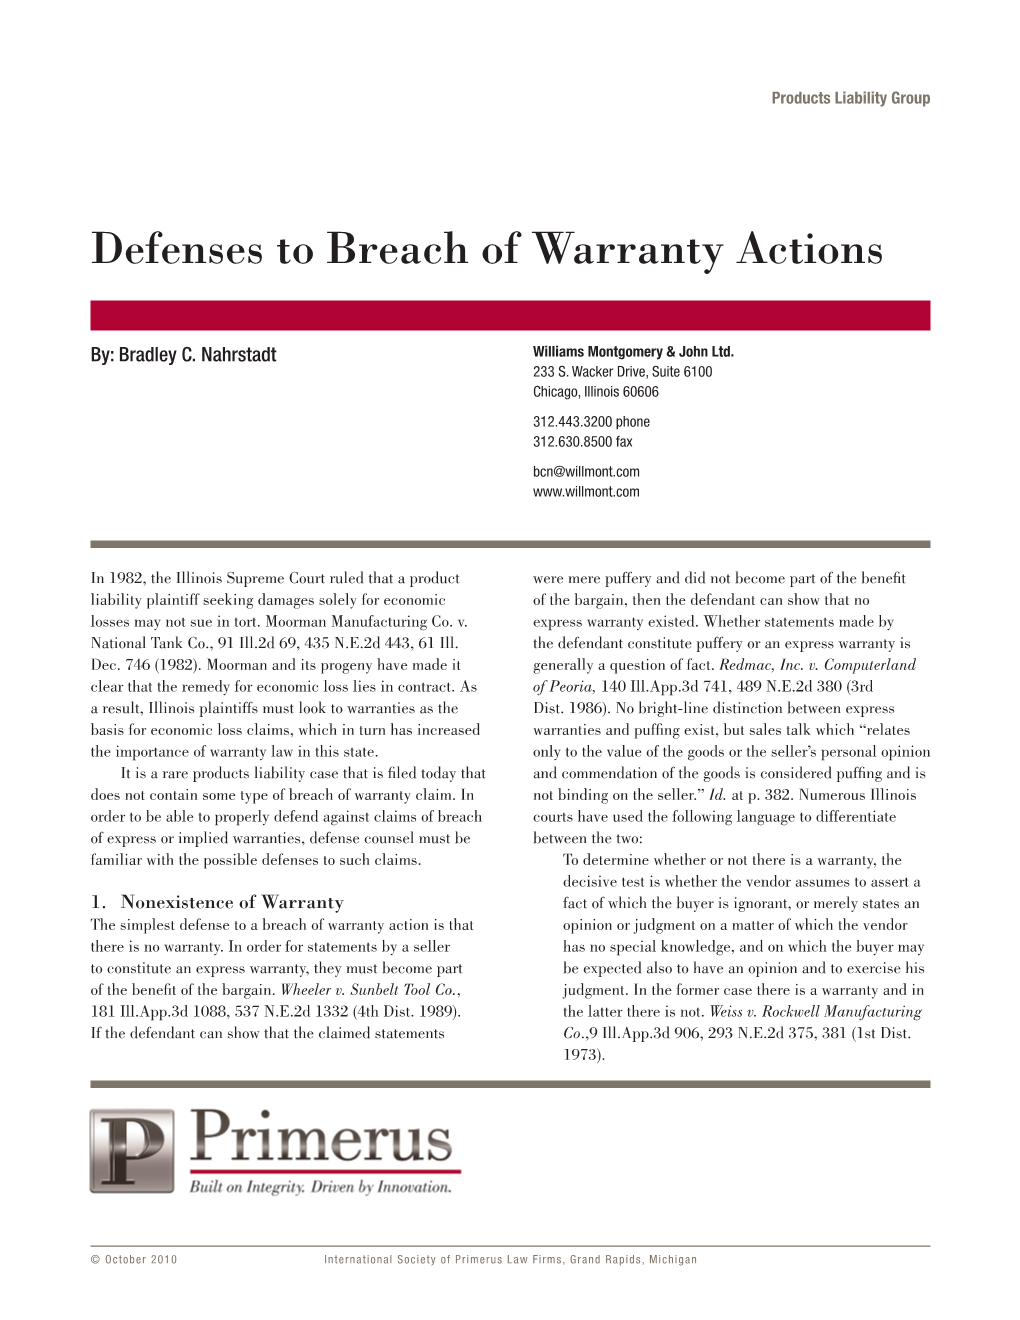 Defenses to Breach of Warranty Actions